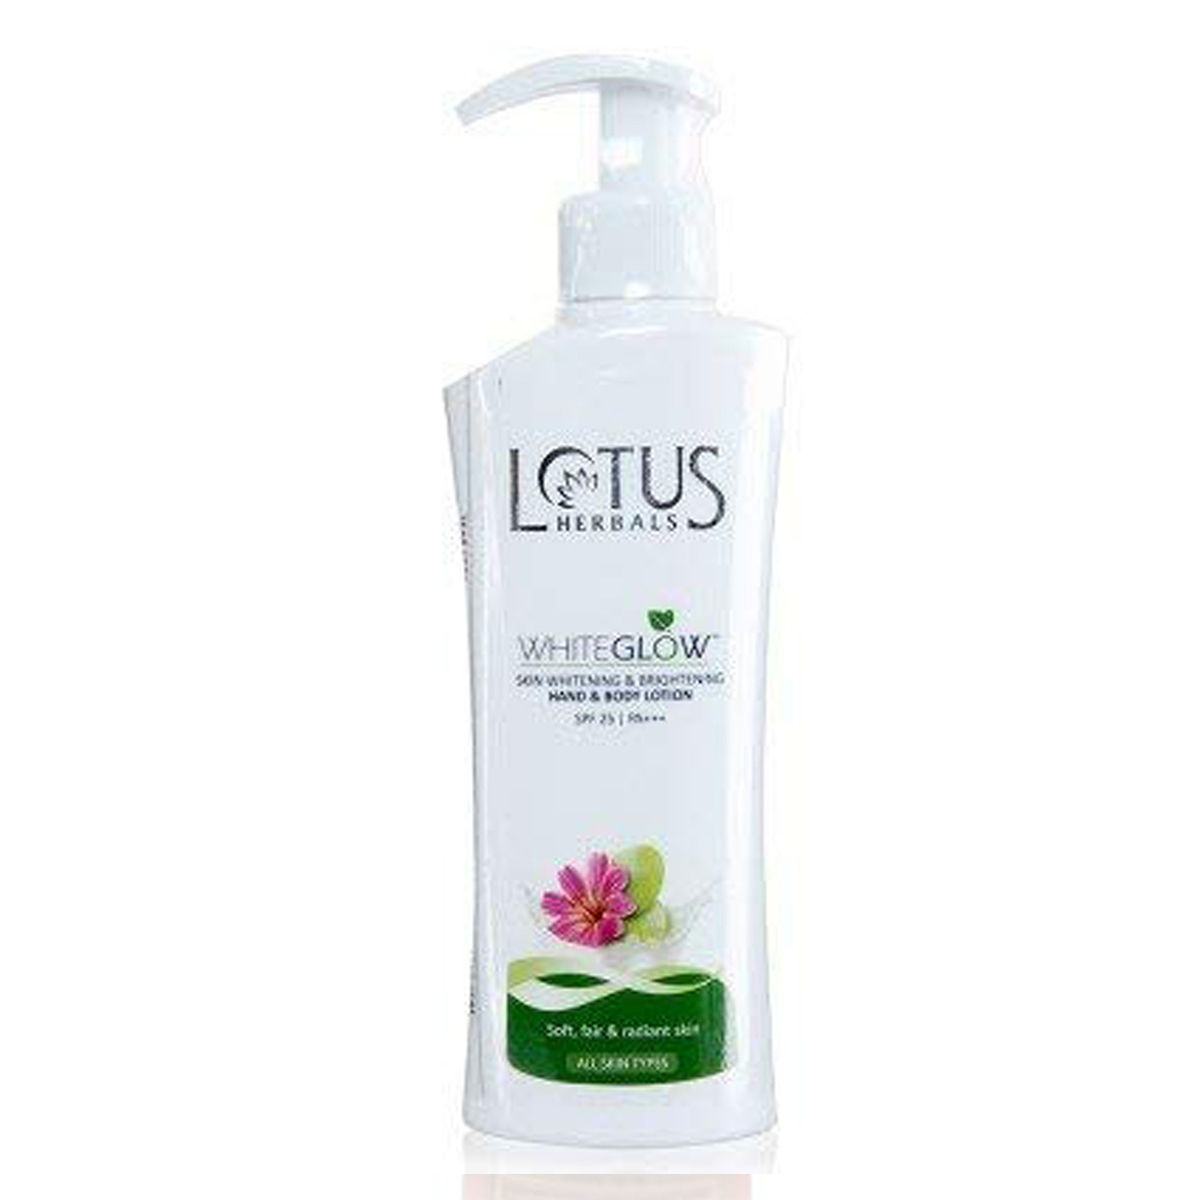 Buy Lotus Herbals Whiteglow Hand & Body Lotion SPF 25 PA+++, 300 ml Online